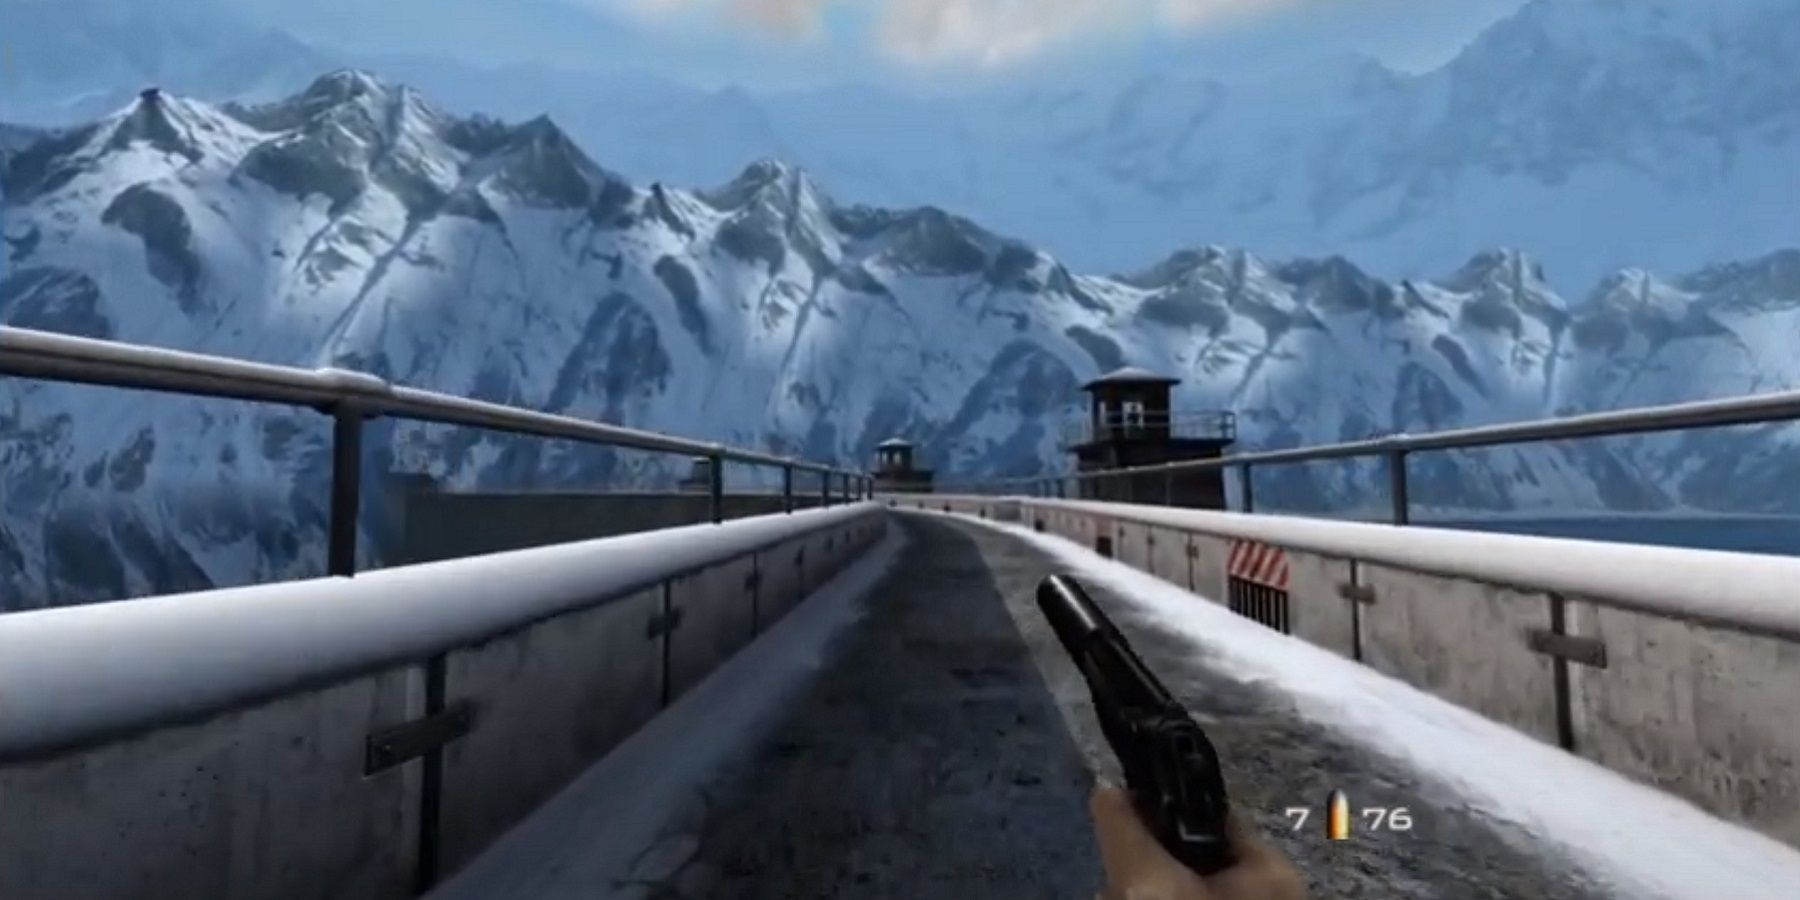 Screenshot from Goldeneye 007 on the Nintendo 64 showing the opening Dam level.